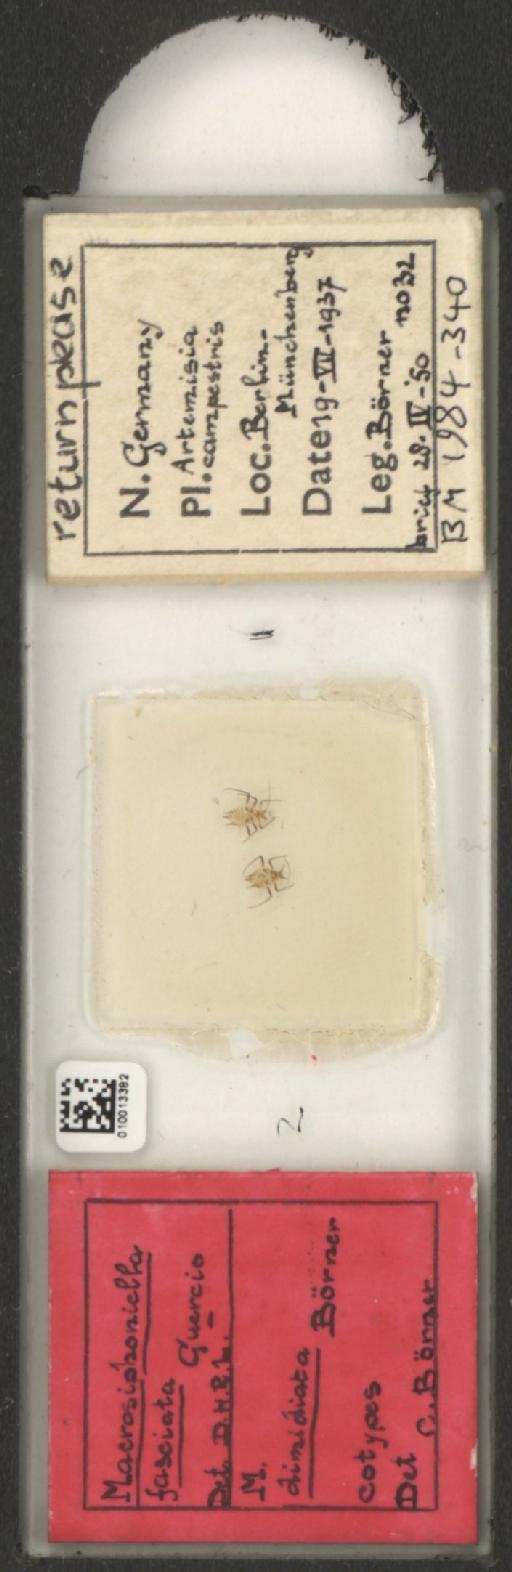 Macrosiphoniella dimidiata Börner, 1942 - 010013382_112659_1094720